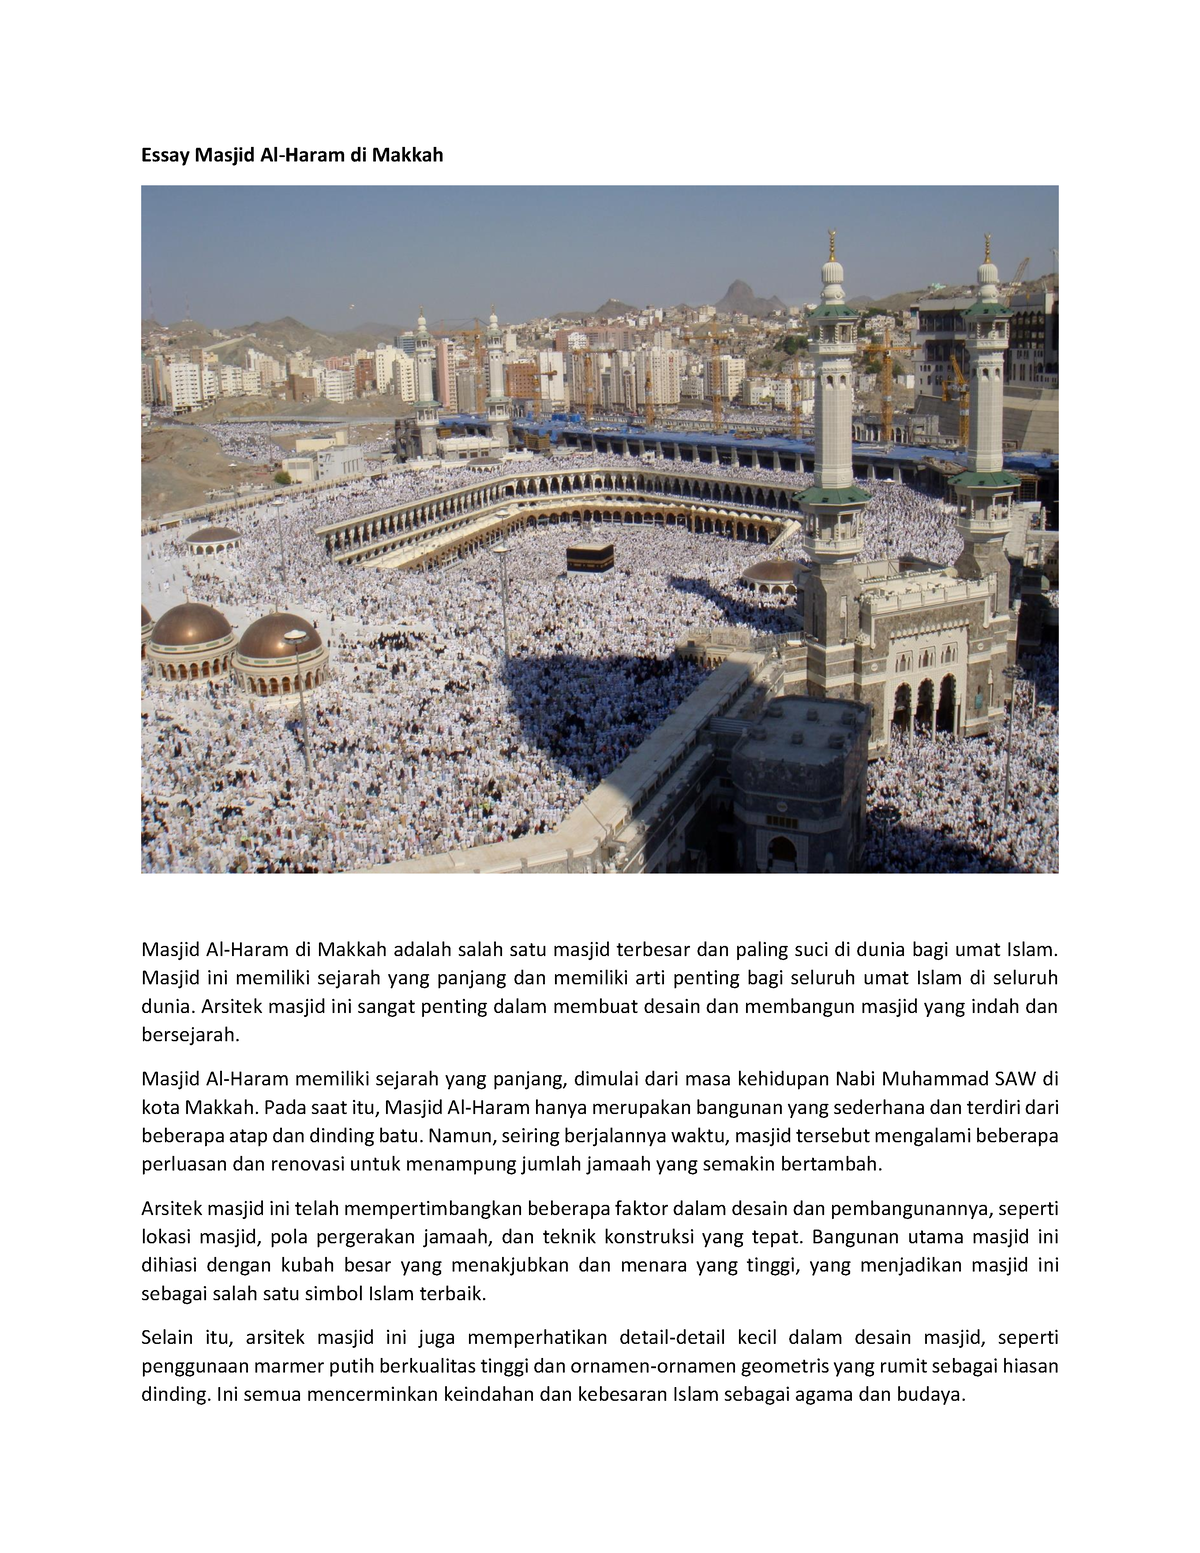 essay about makkah